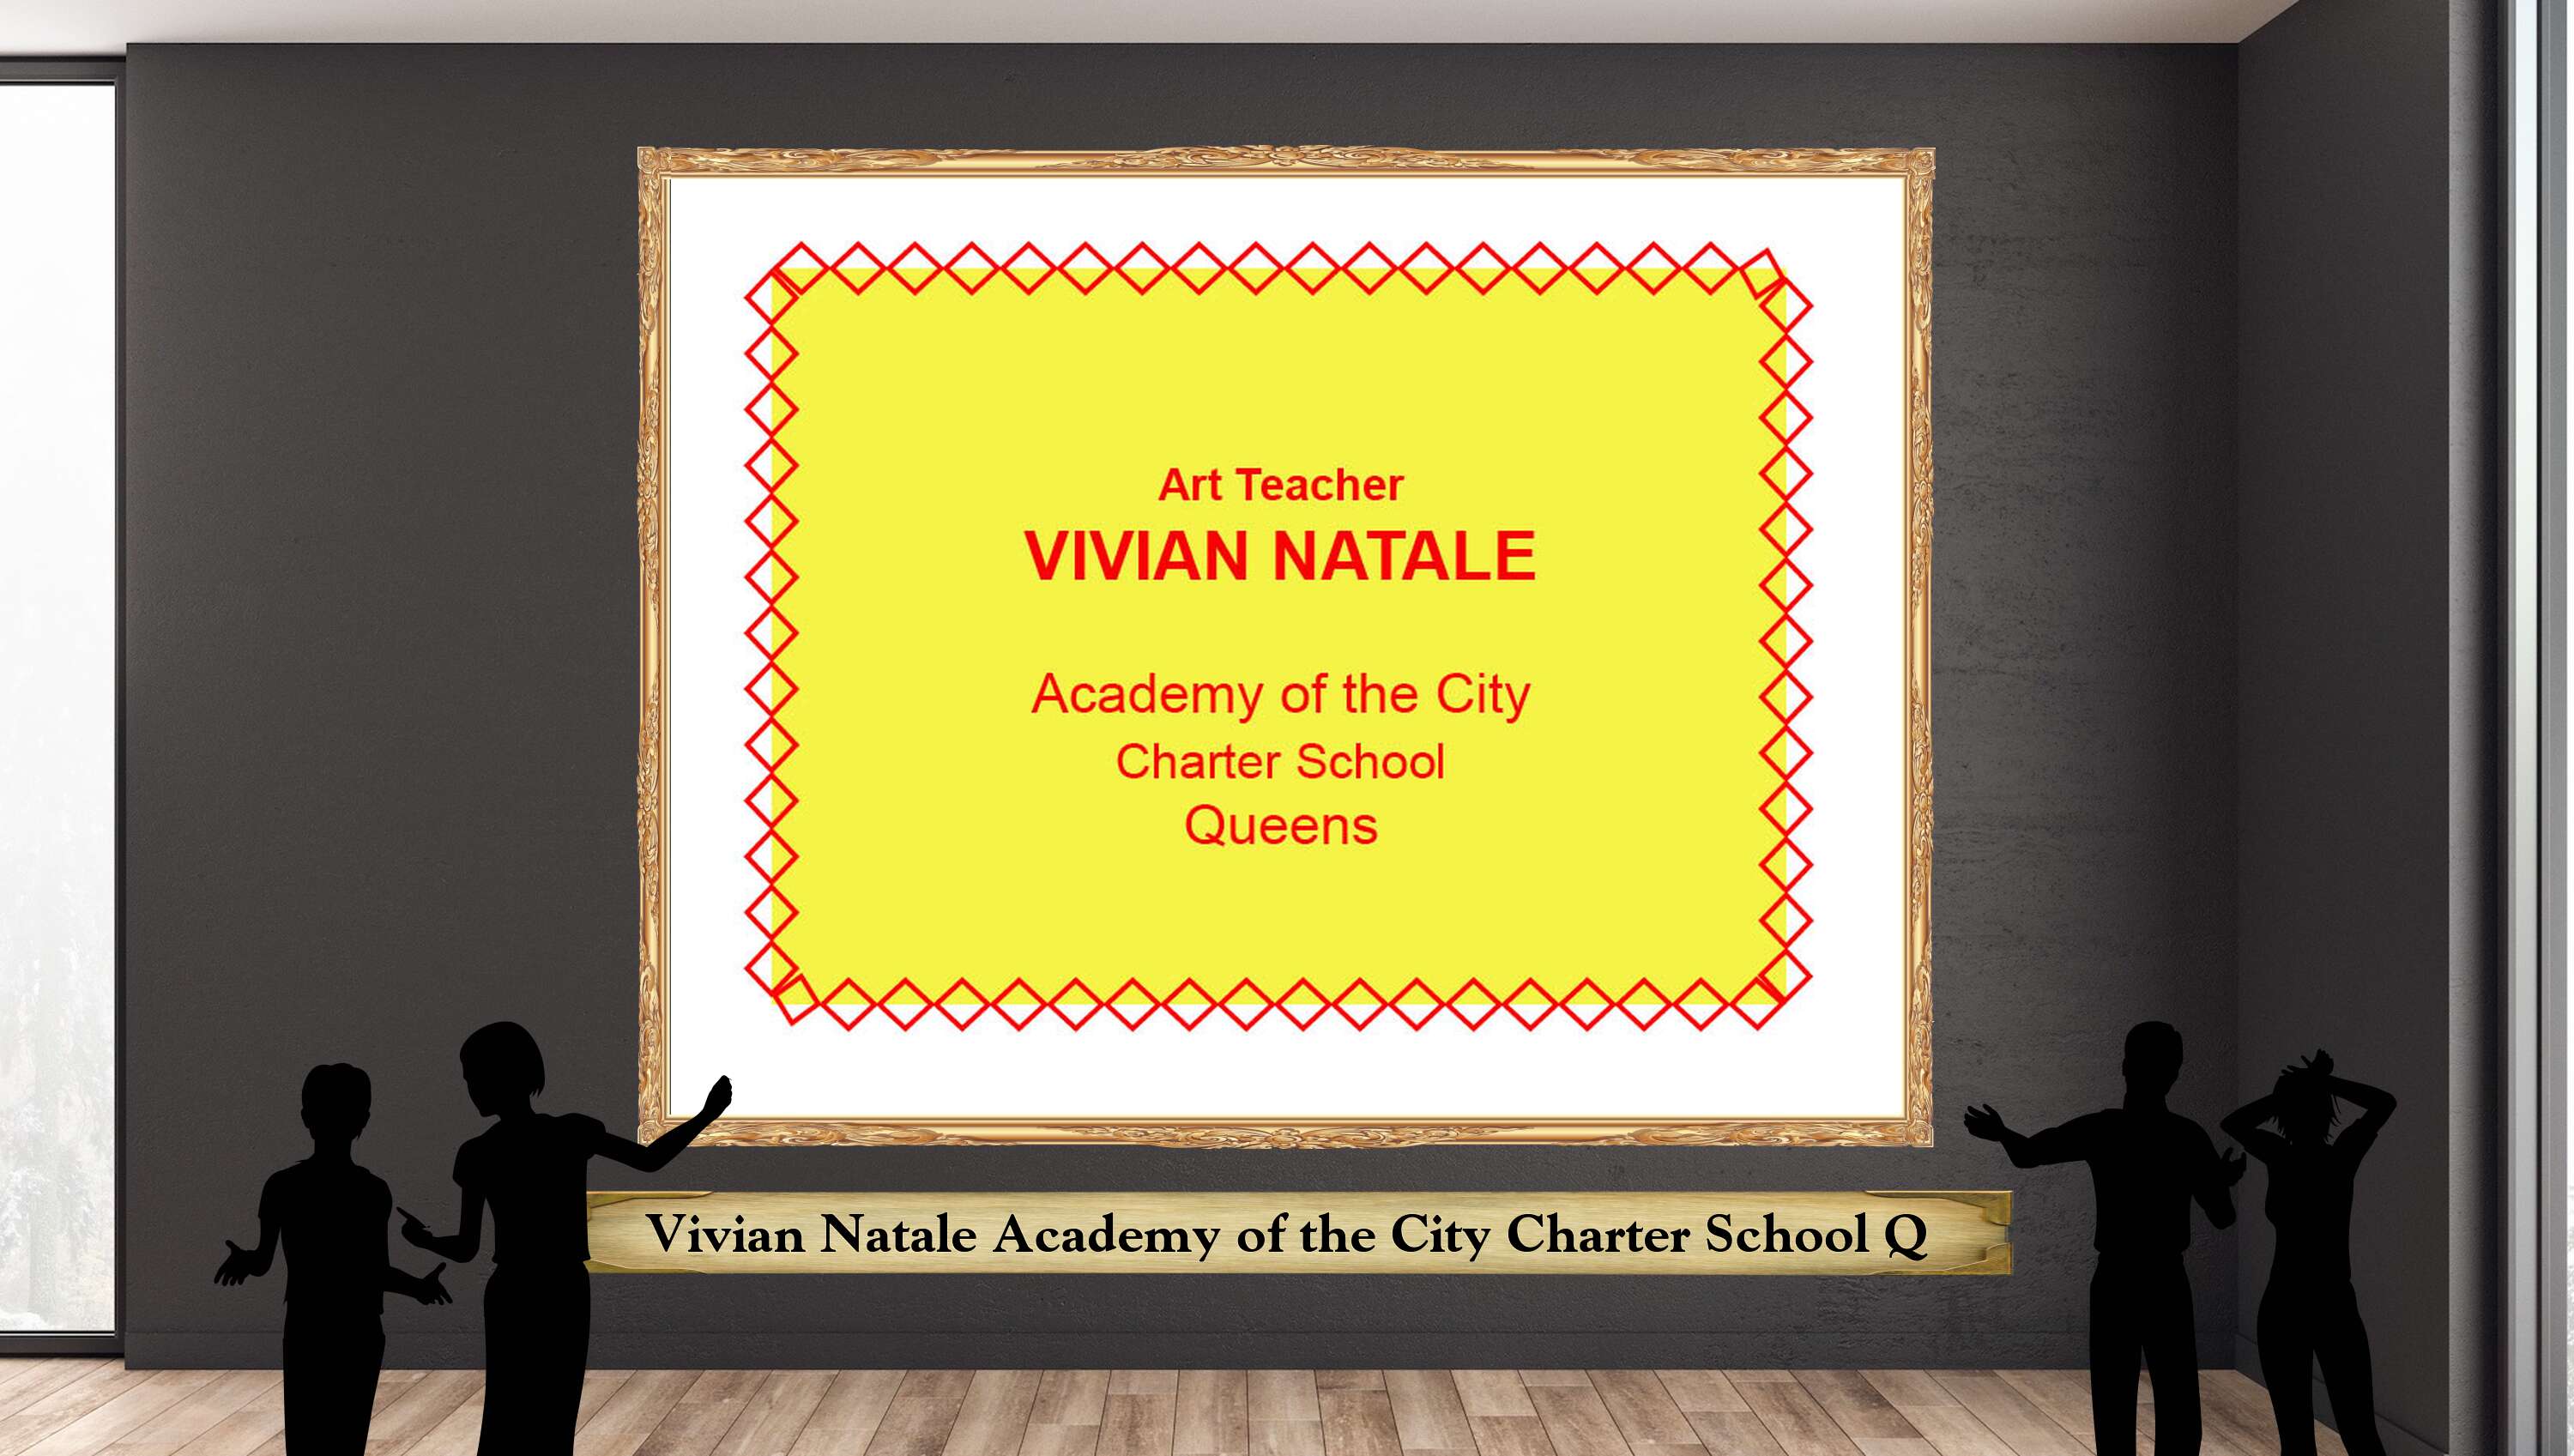 Vivian Natale Academy of the City Charter School Q